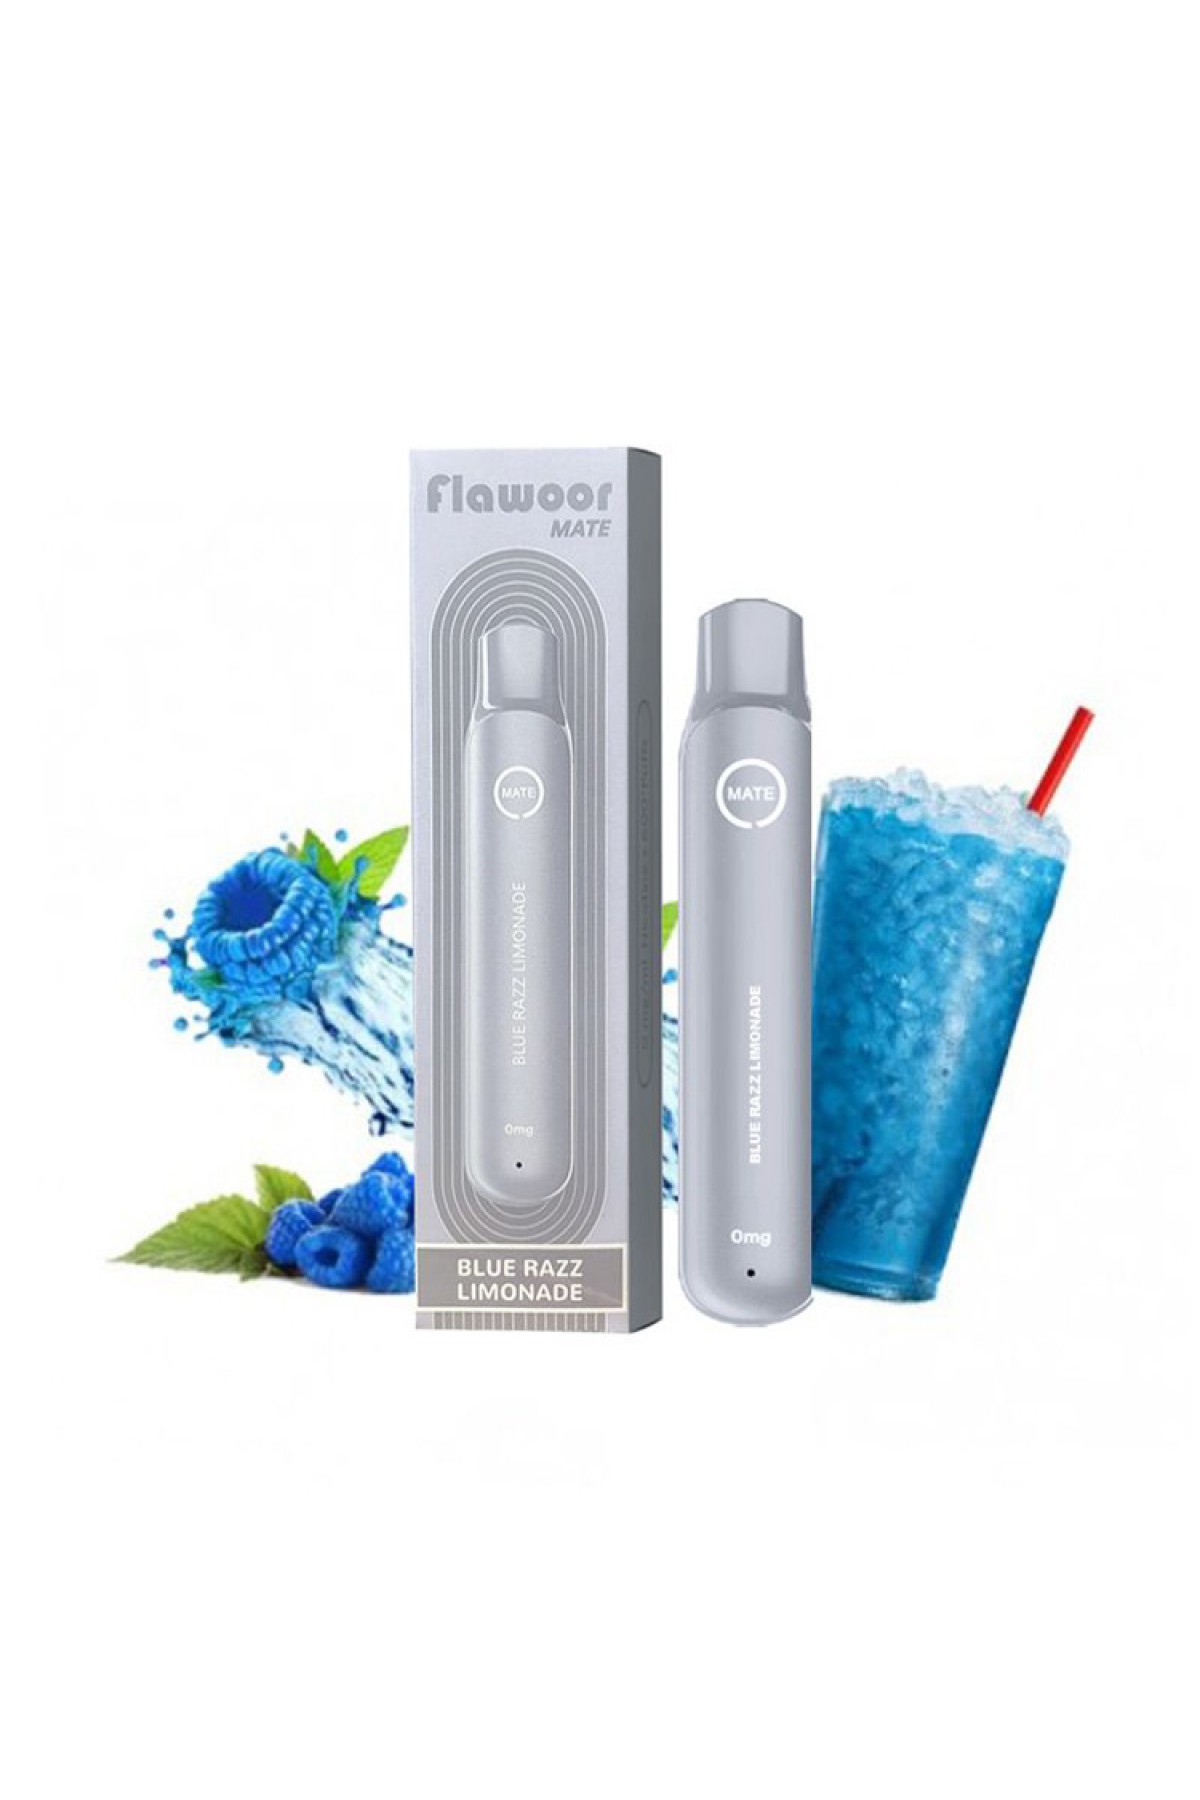 Flawoor Mate - Blue Razz Limonade 600 Puff Kit